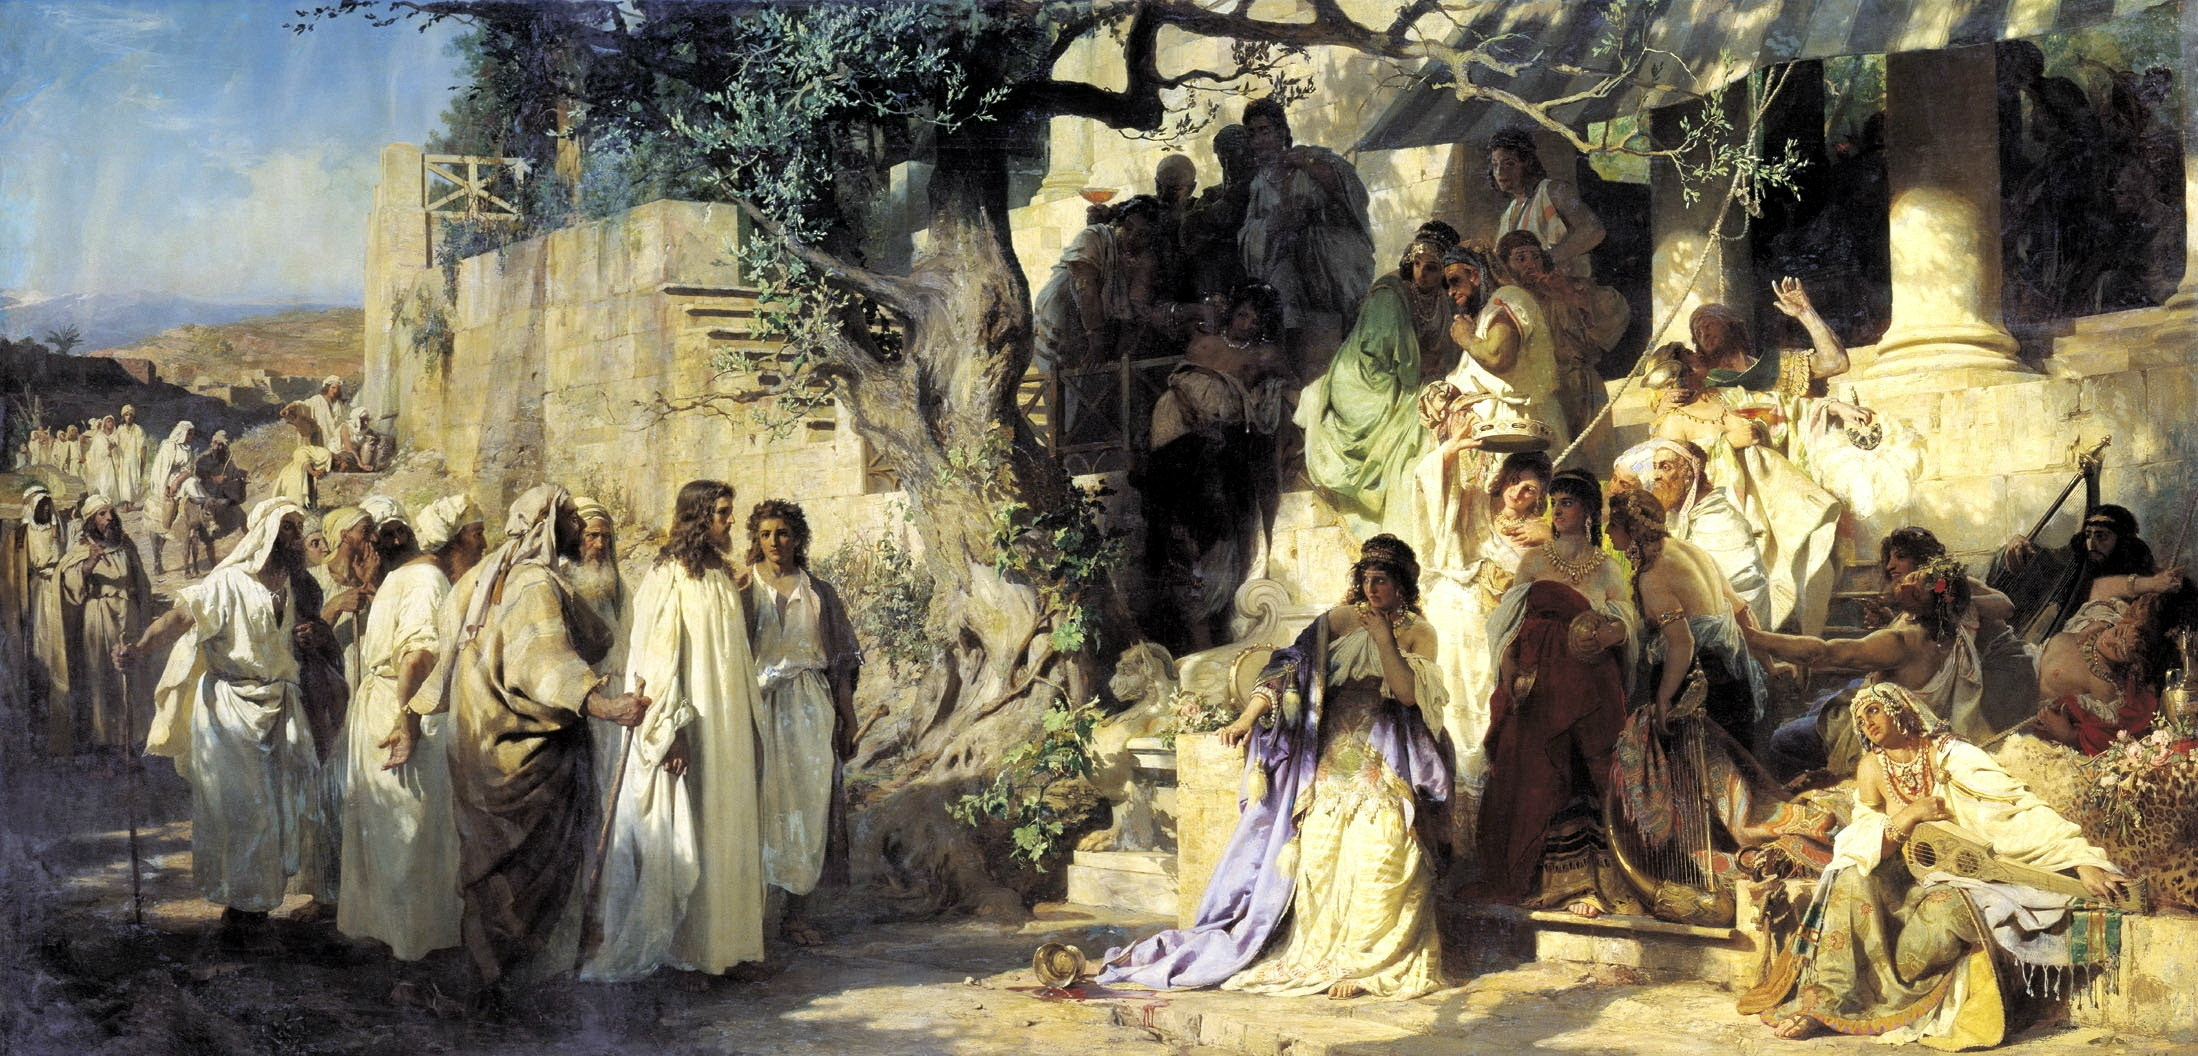 Religious artistic portrayal of Jesus Christ.